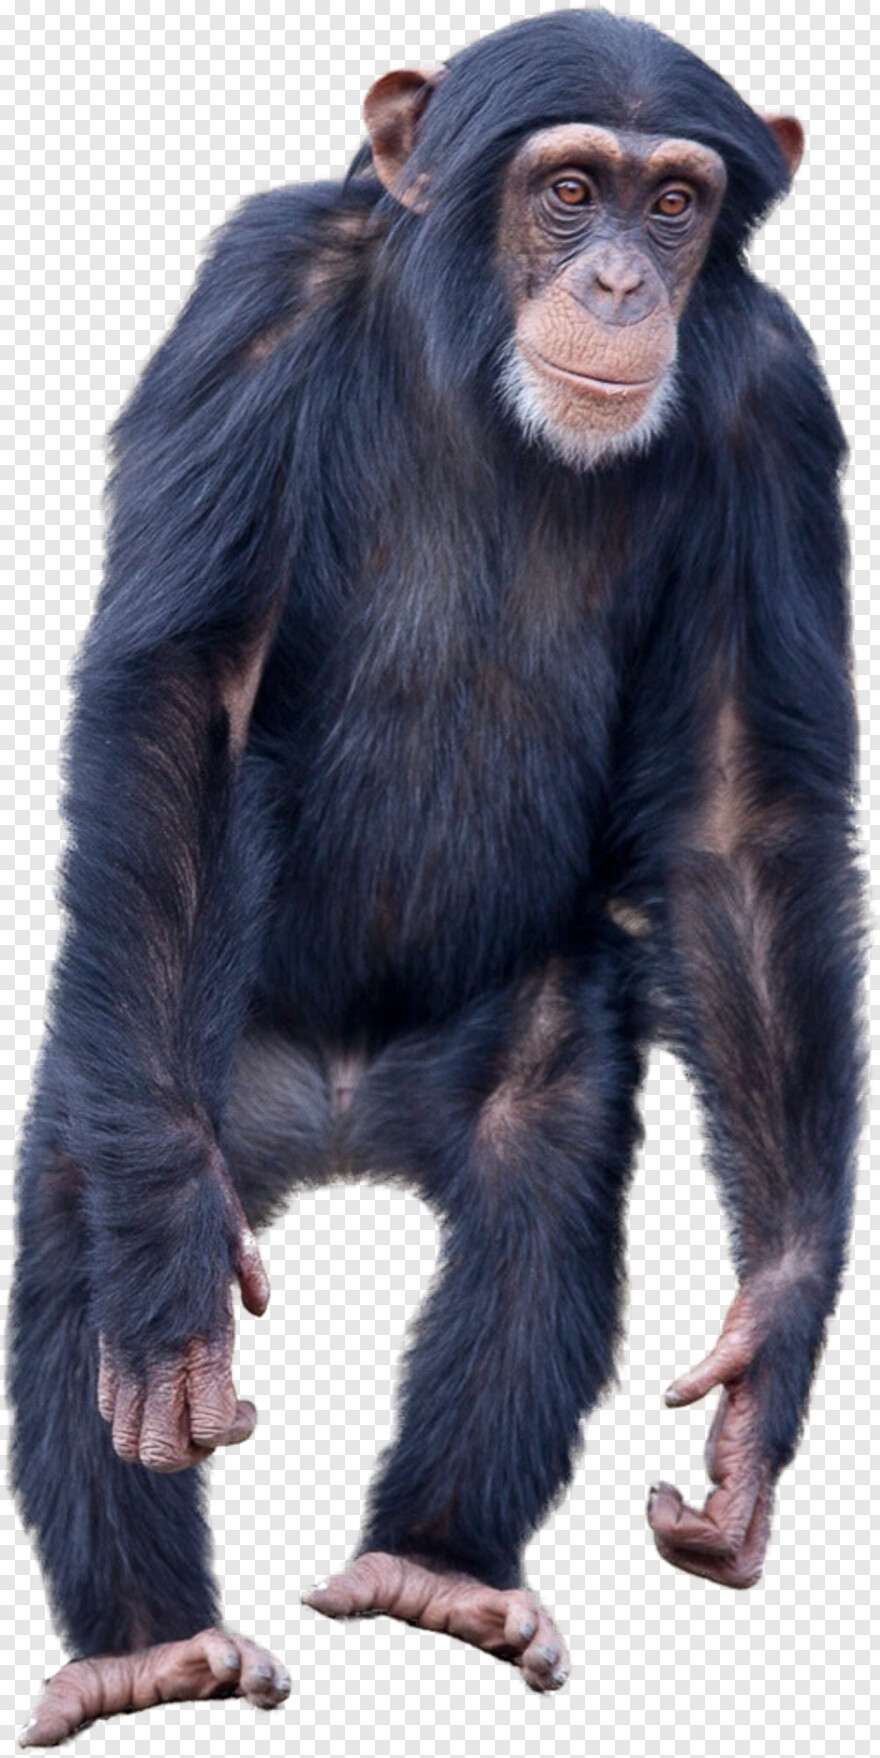 monkey-silhouette # 427965